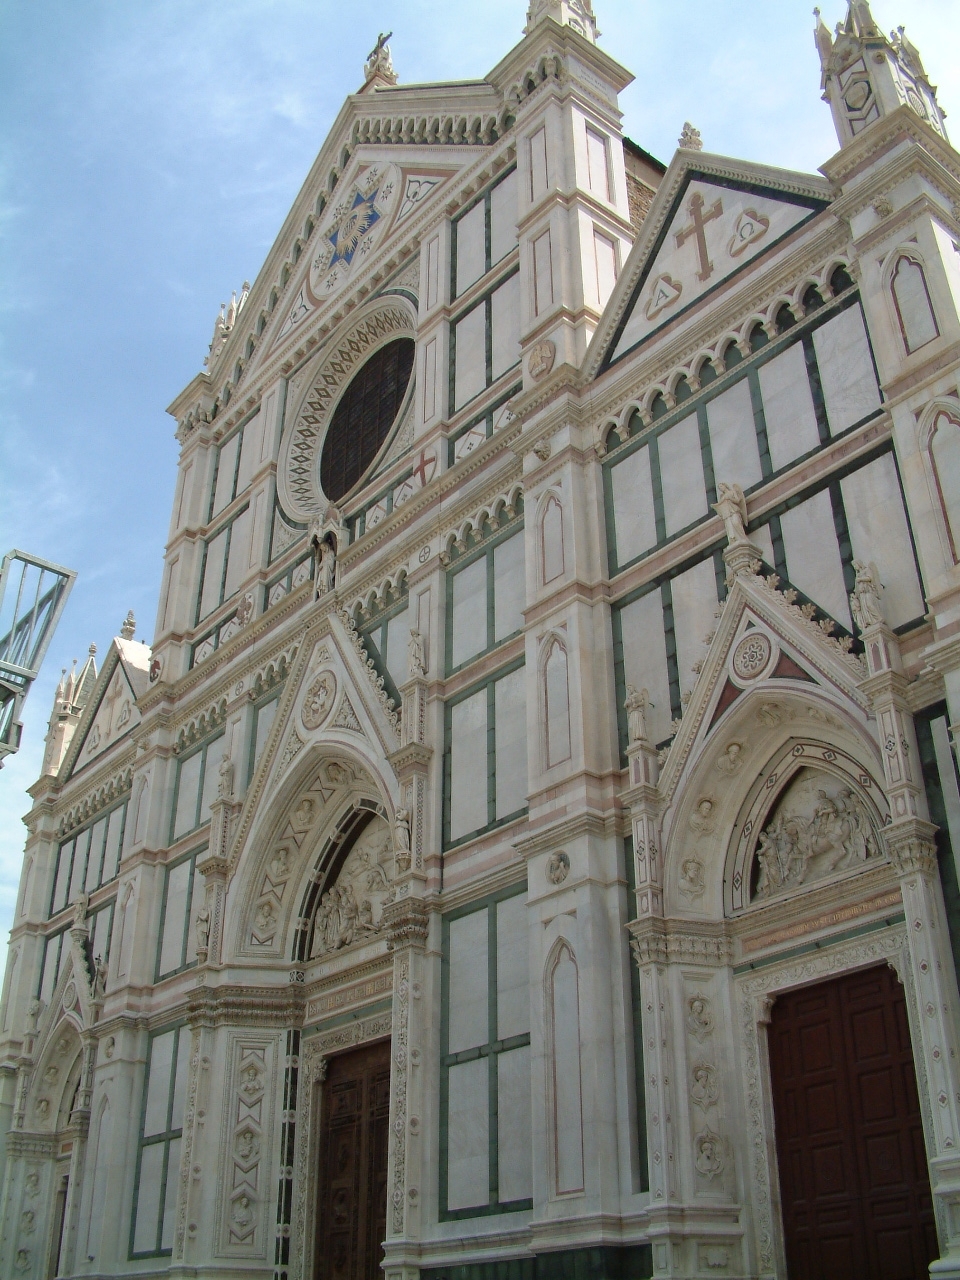 Basilica Santa Croce - Beautiful facade